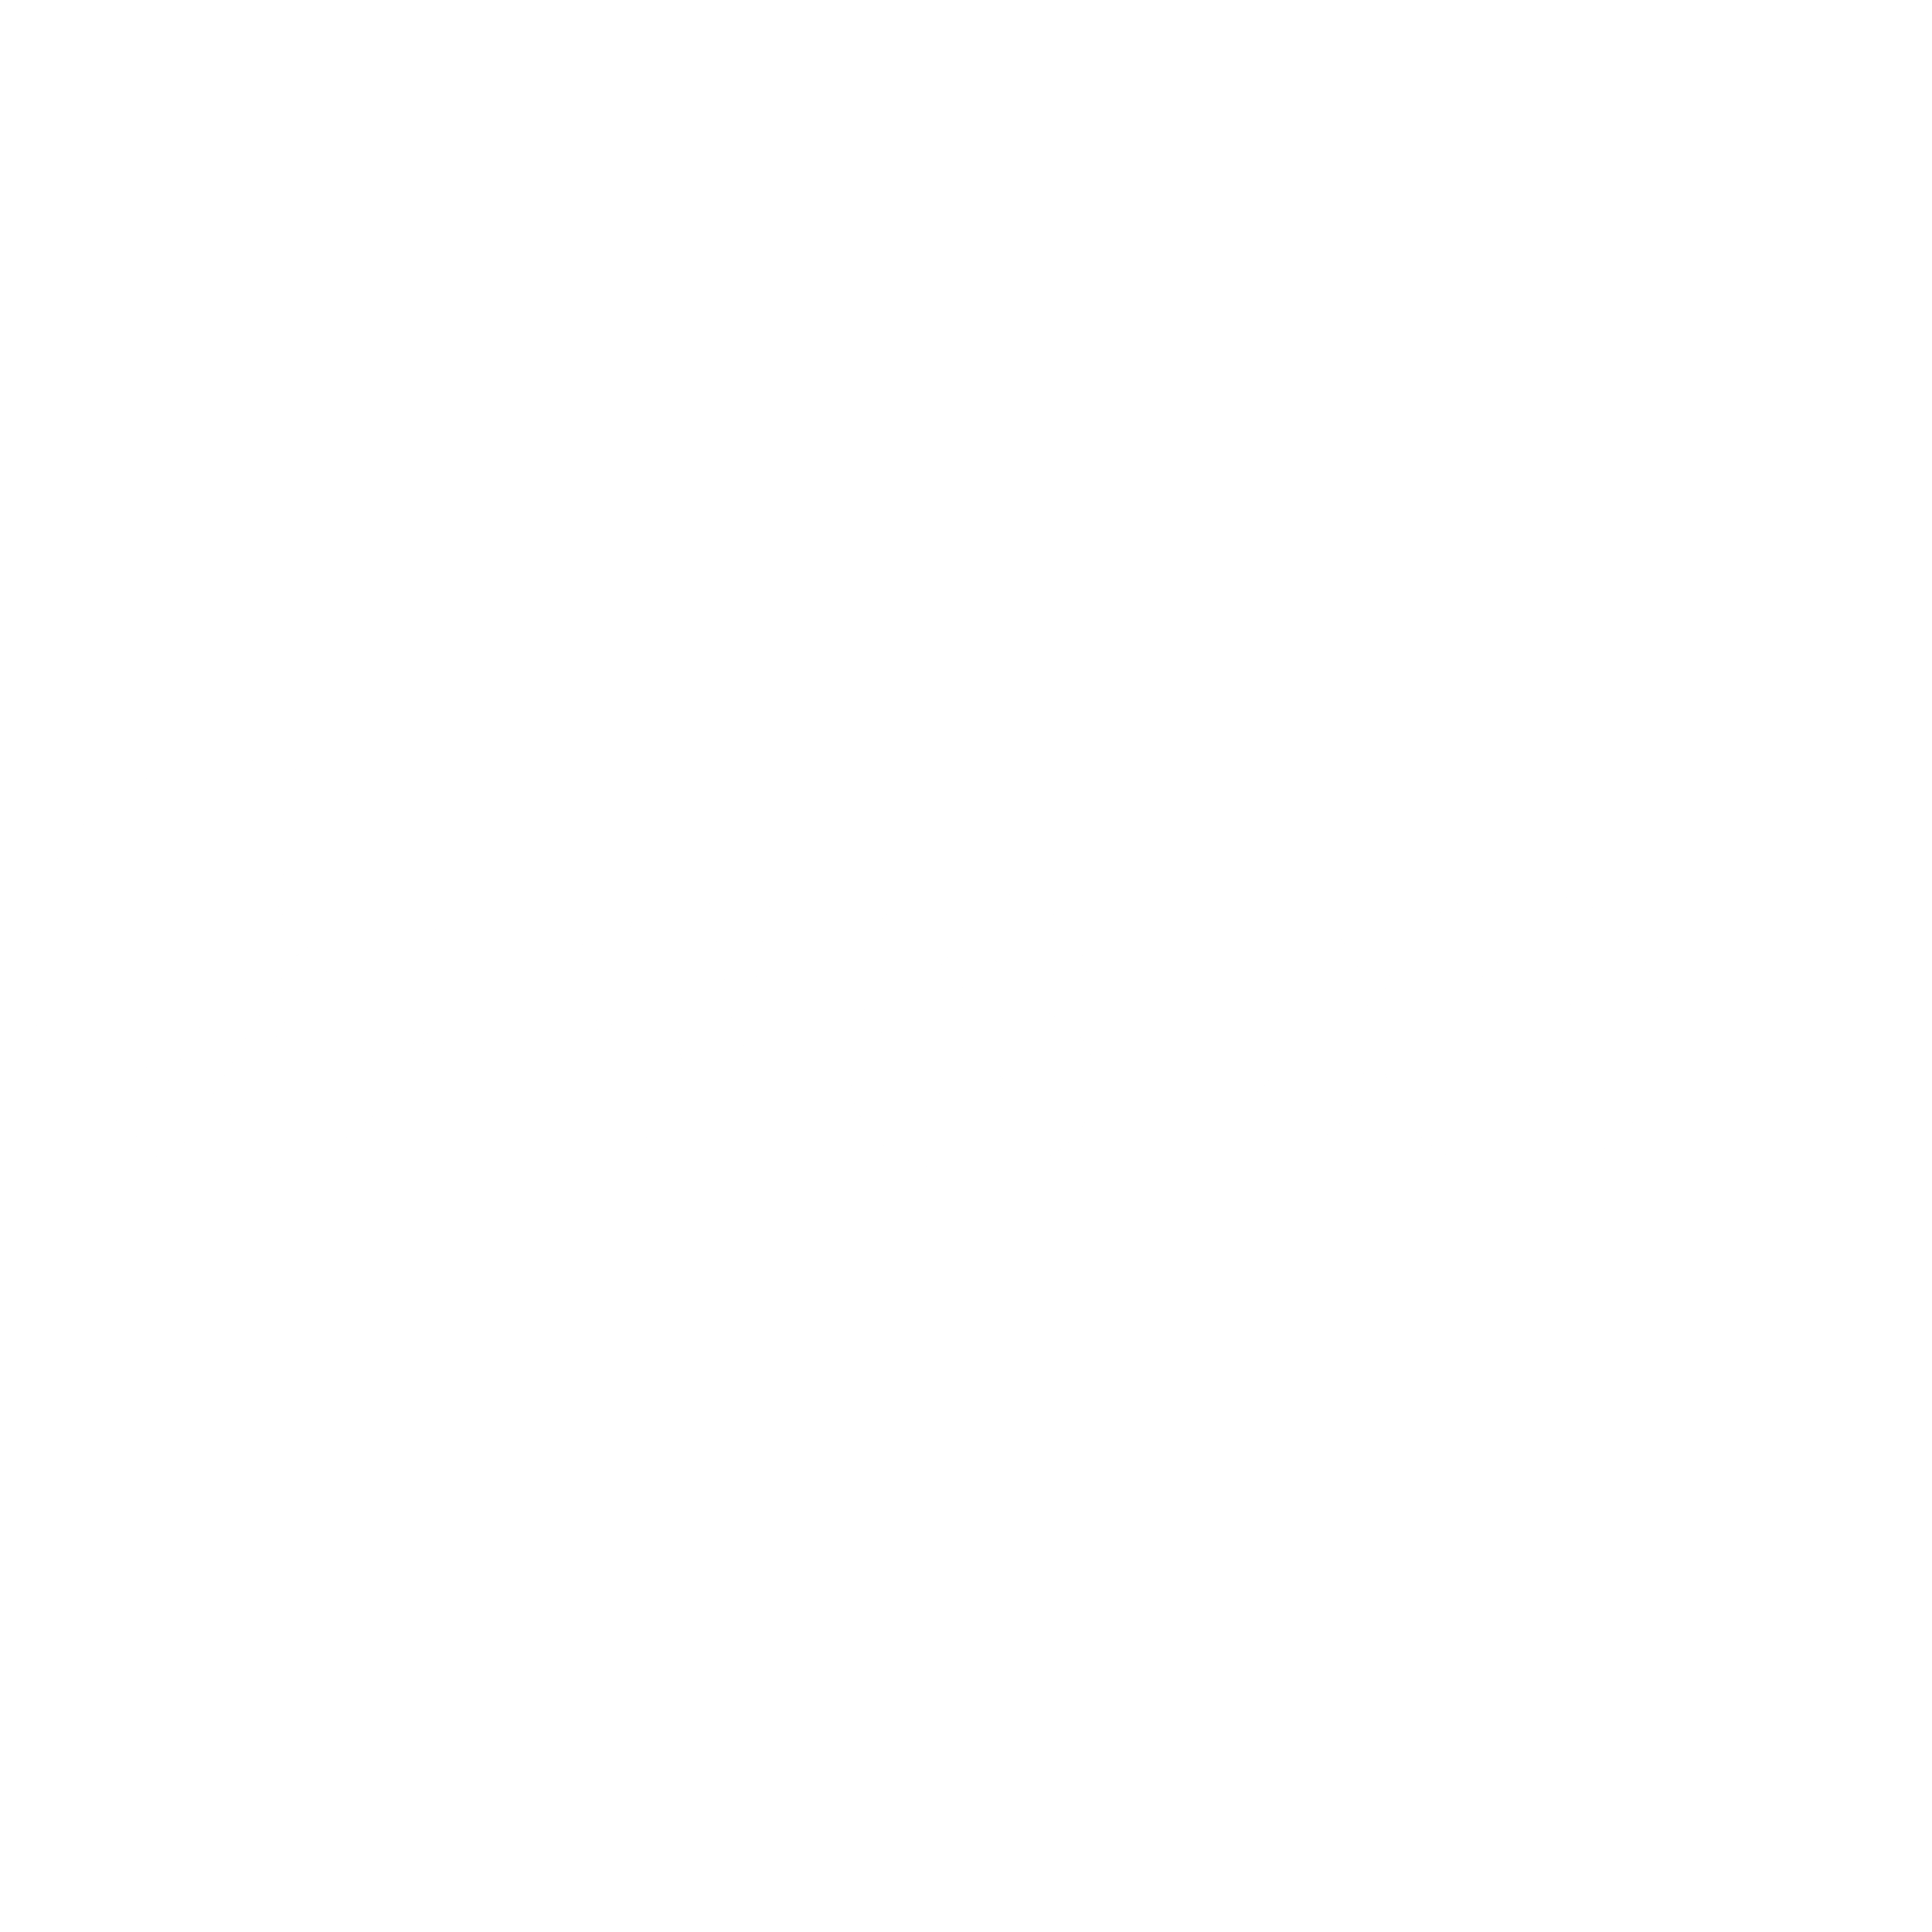 WSDOT Logo - WSDOT Logo PNG Transparent & SVG Vector